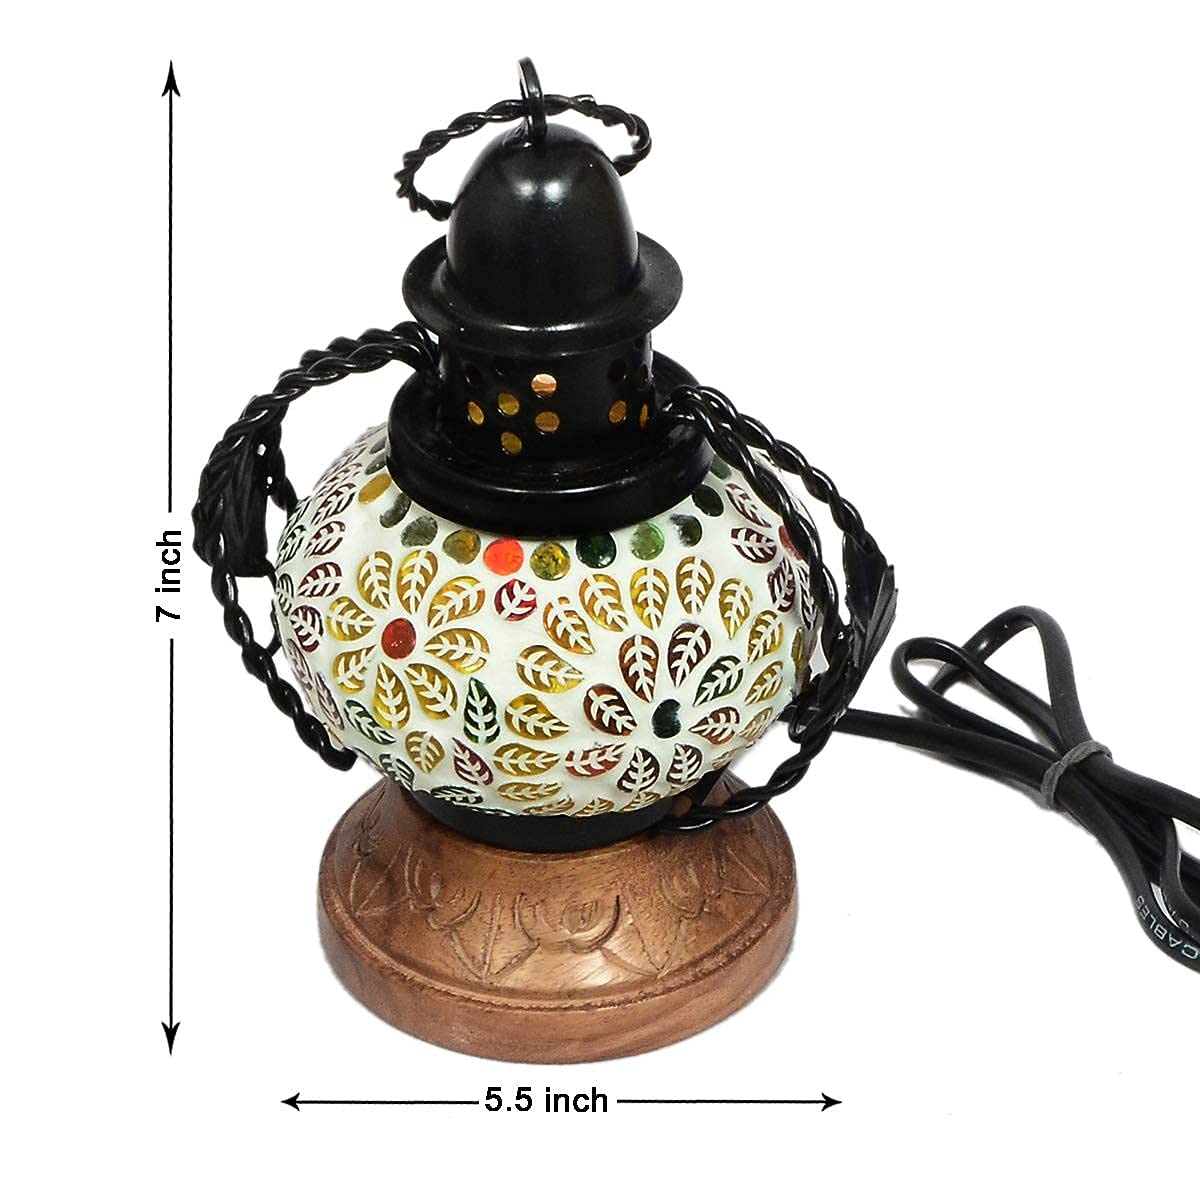 Handmade Wooden & Iron Beautiful Electric Lamp